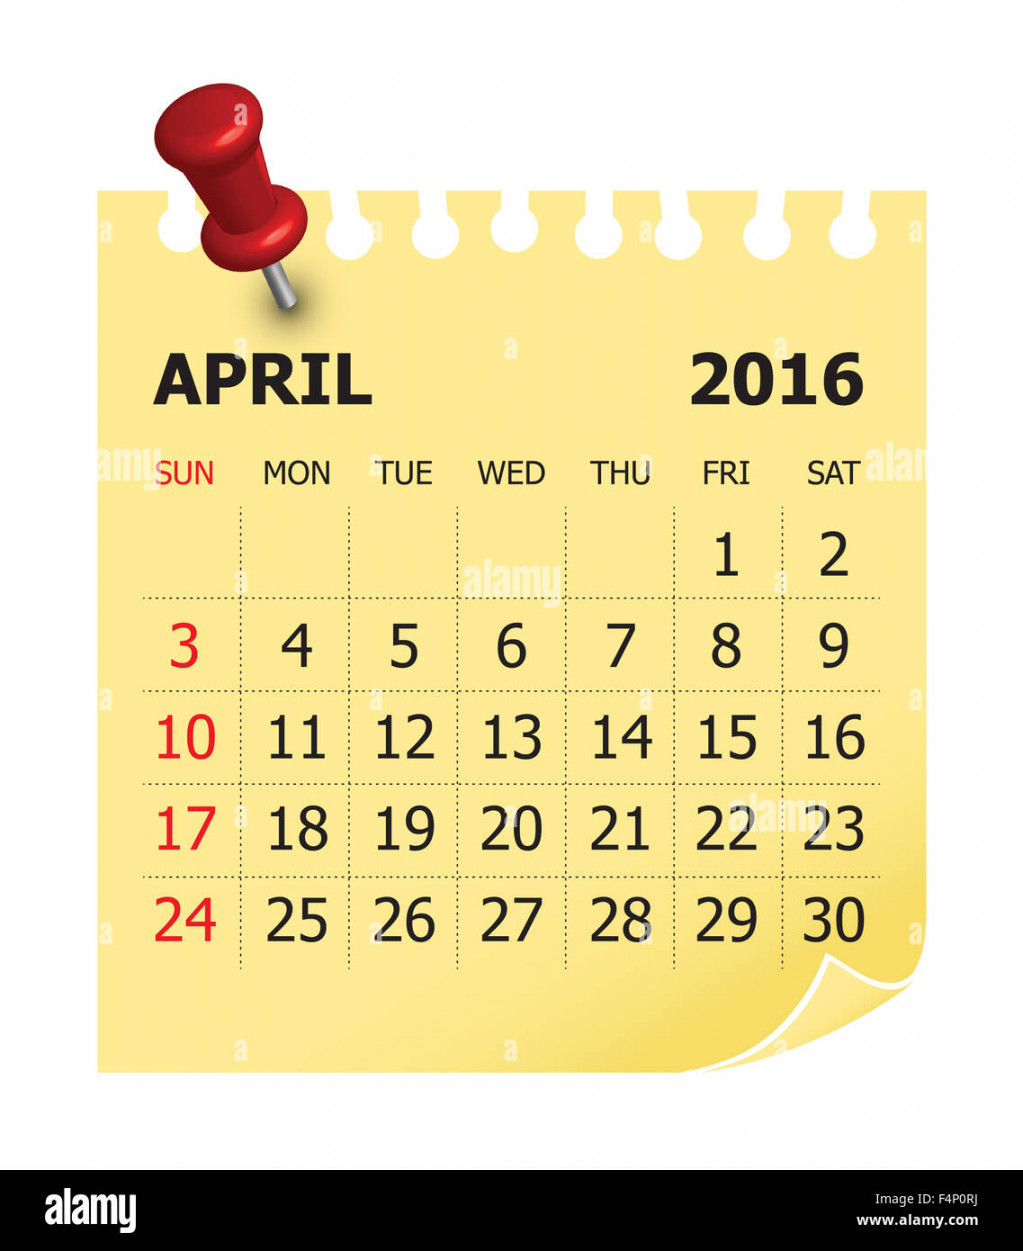 Simple calendar for April  Stock Photo - Alamy